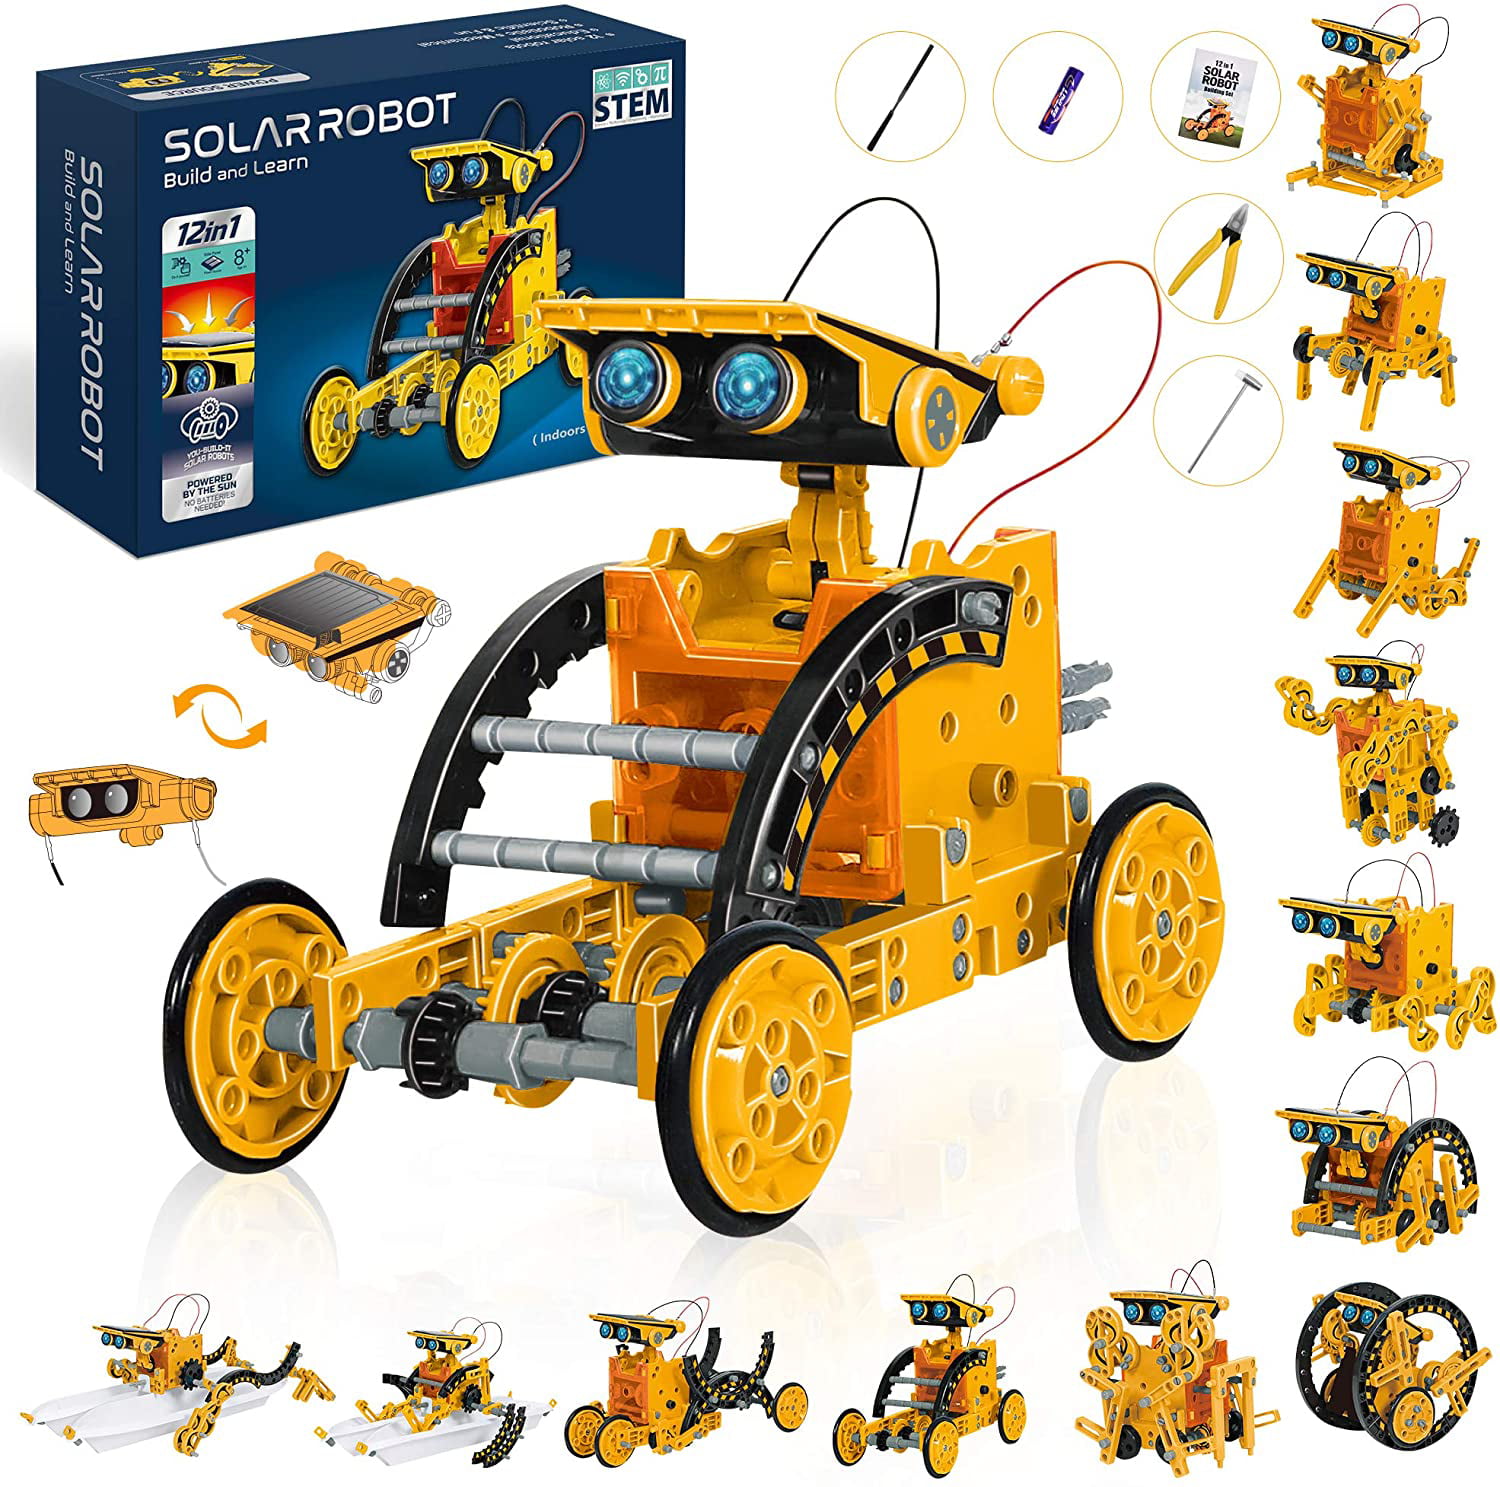 STEM 11-in-1 Solar Robot Kit Educational Science Building Toys Gift for Kids 8 